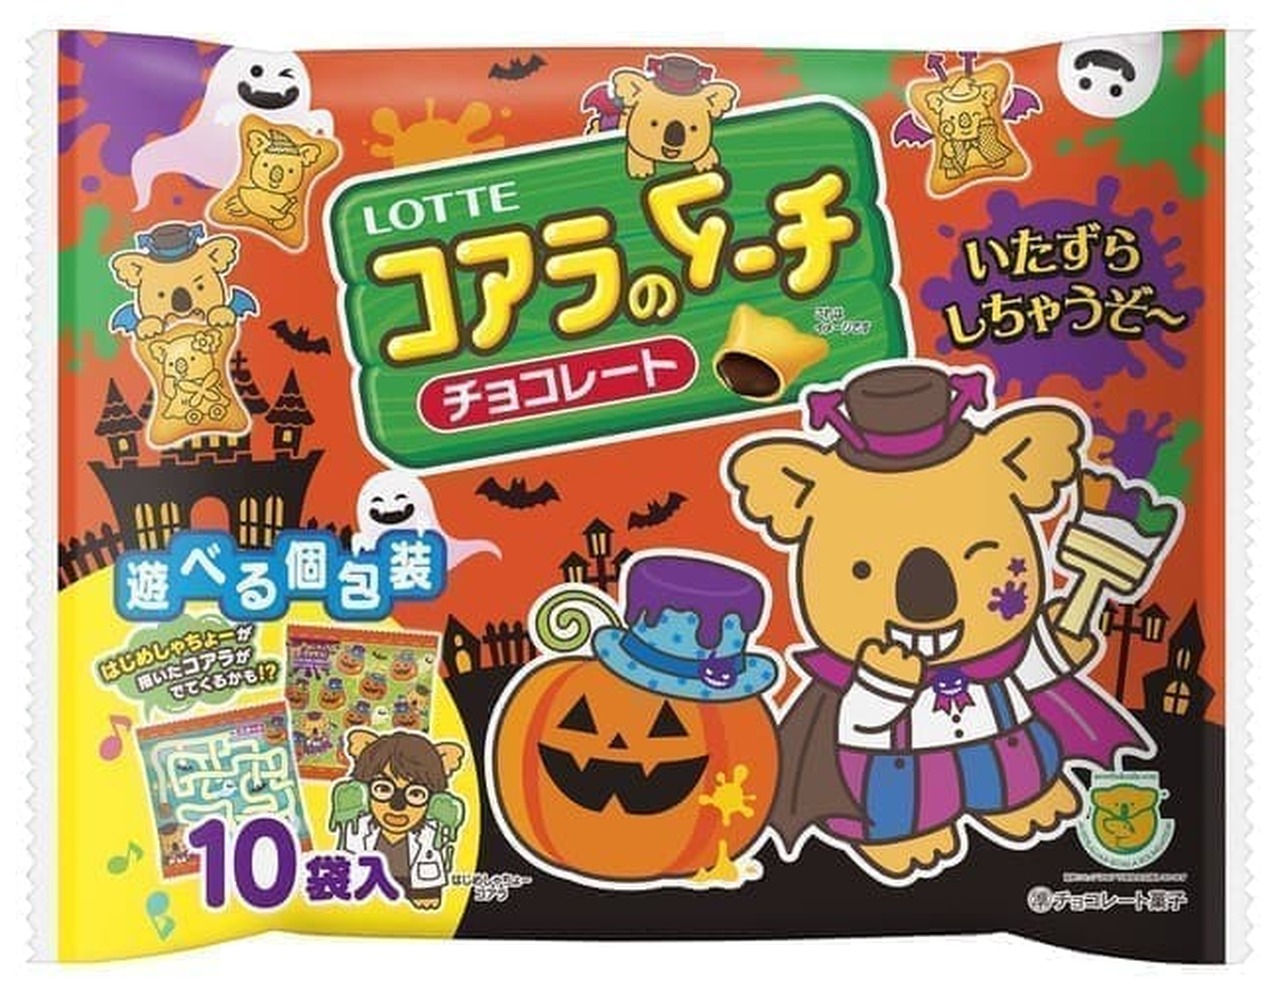 Lotte "Enjoy Halloween Koala March Share Pack"